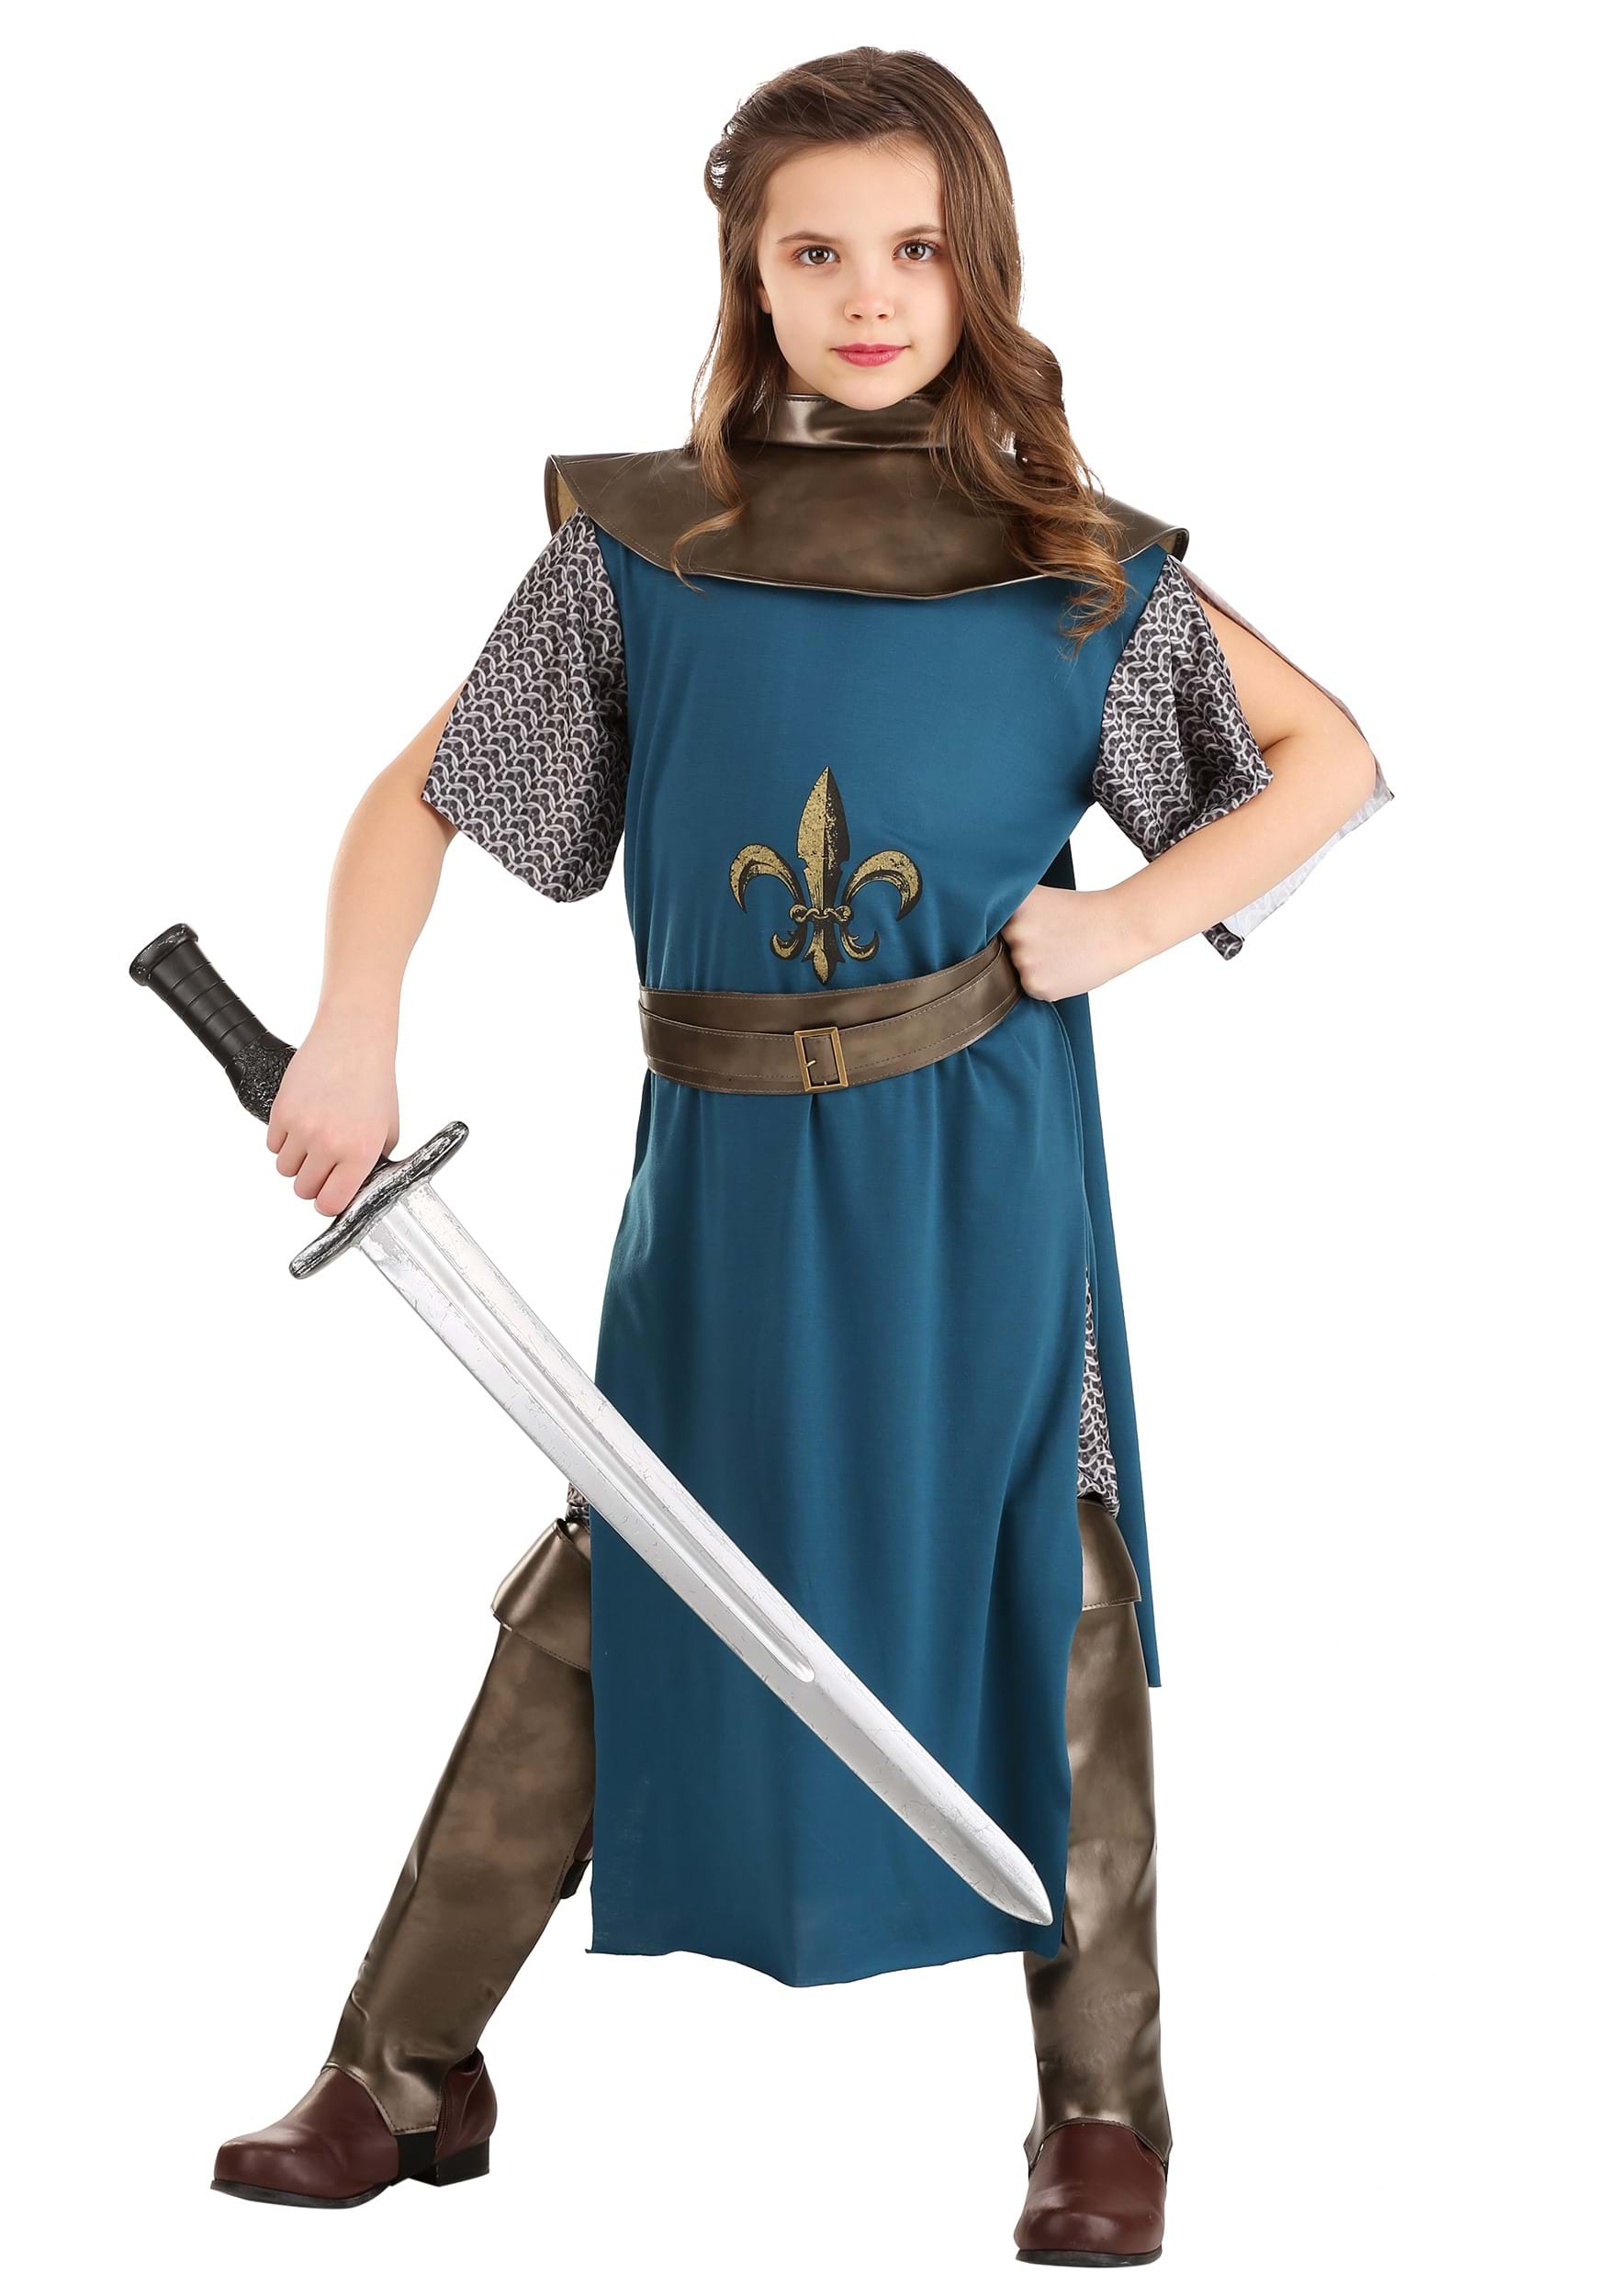 Joan of arc costume